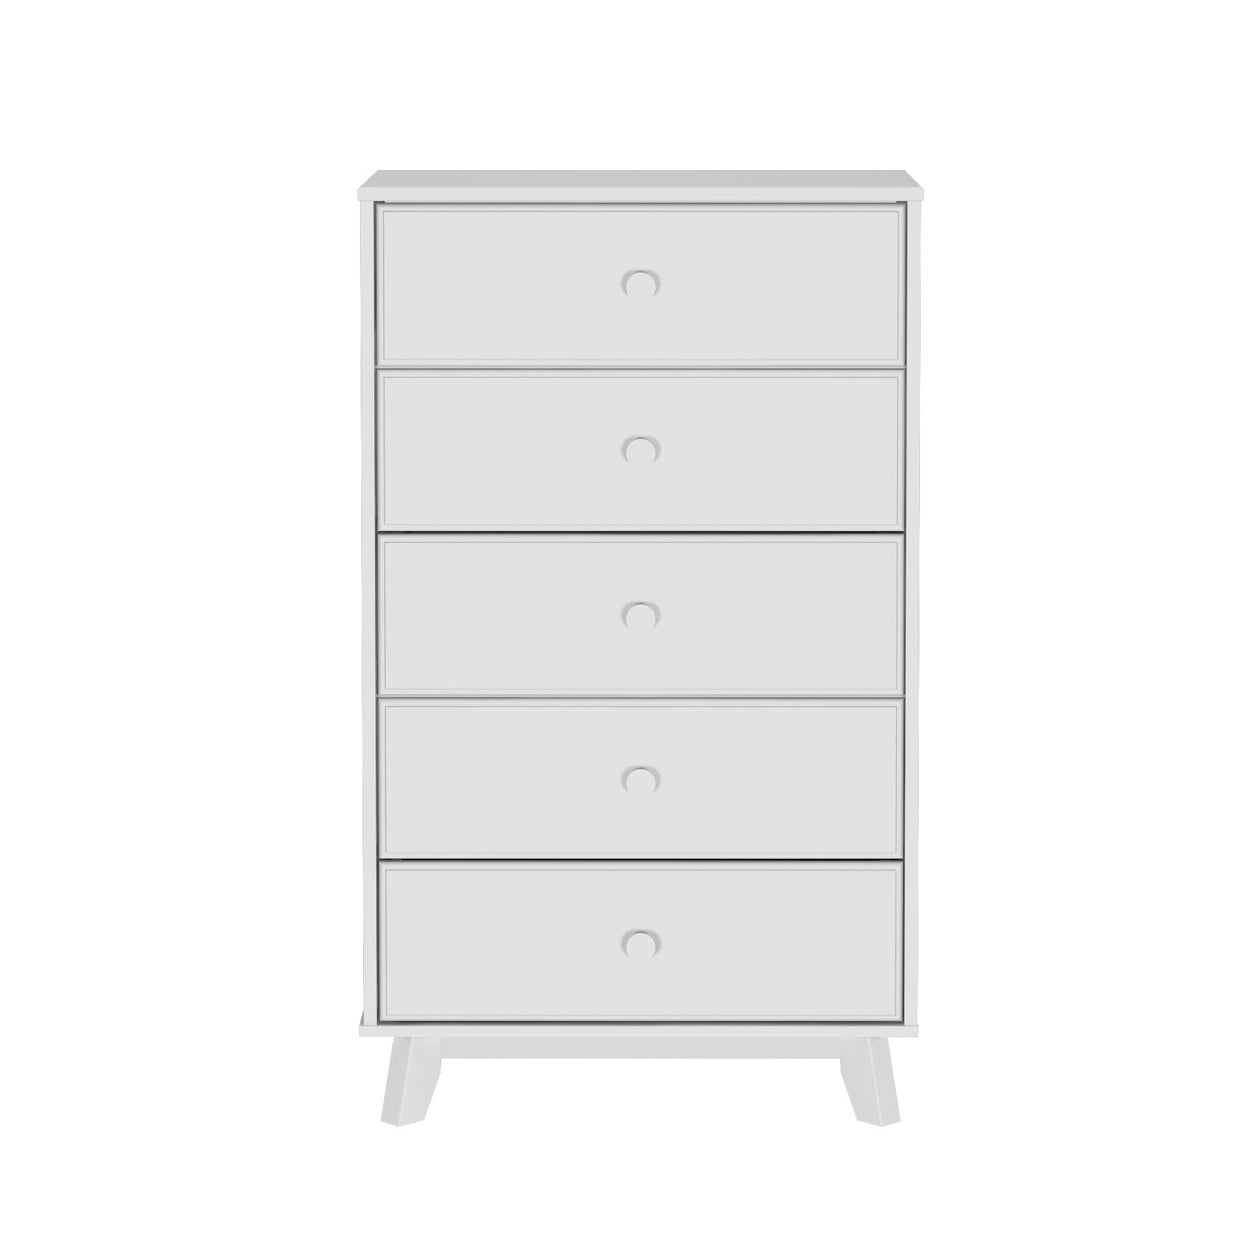 1800215000-002 : Furniture Max & Lily 5 Drawer Dresser, White